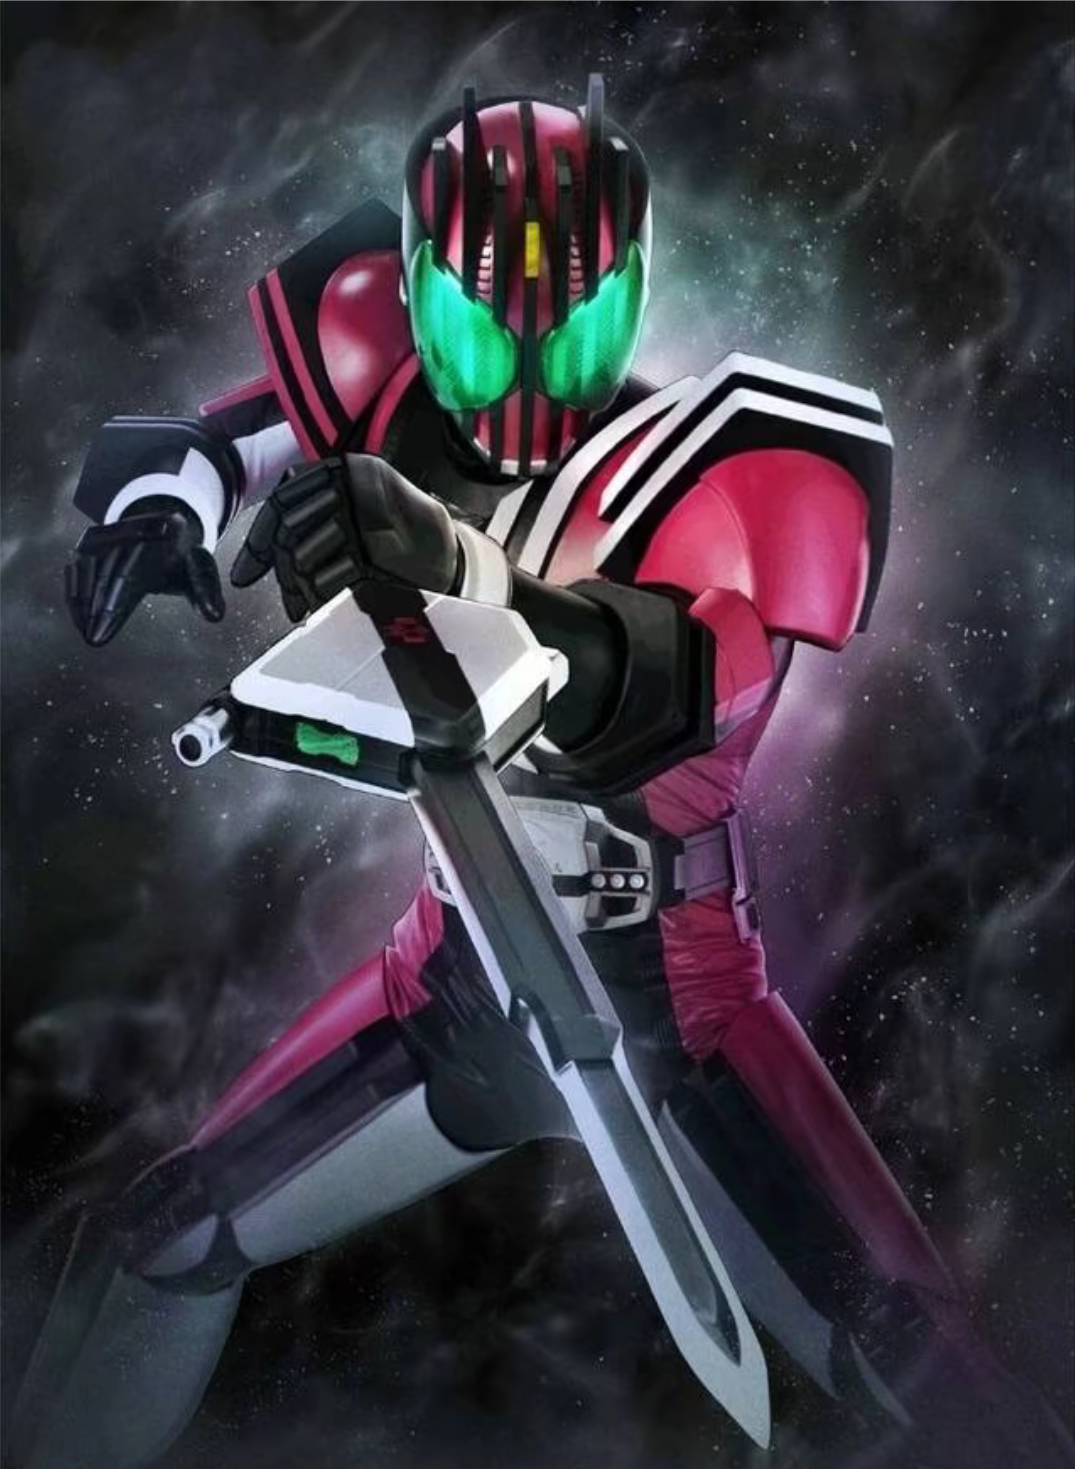 Kamen Rider Calibur - Kamen Rider Saber - Image #3173673 - Zerochan ...